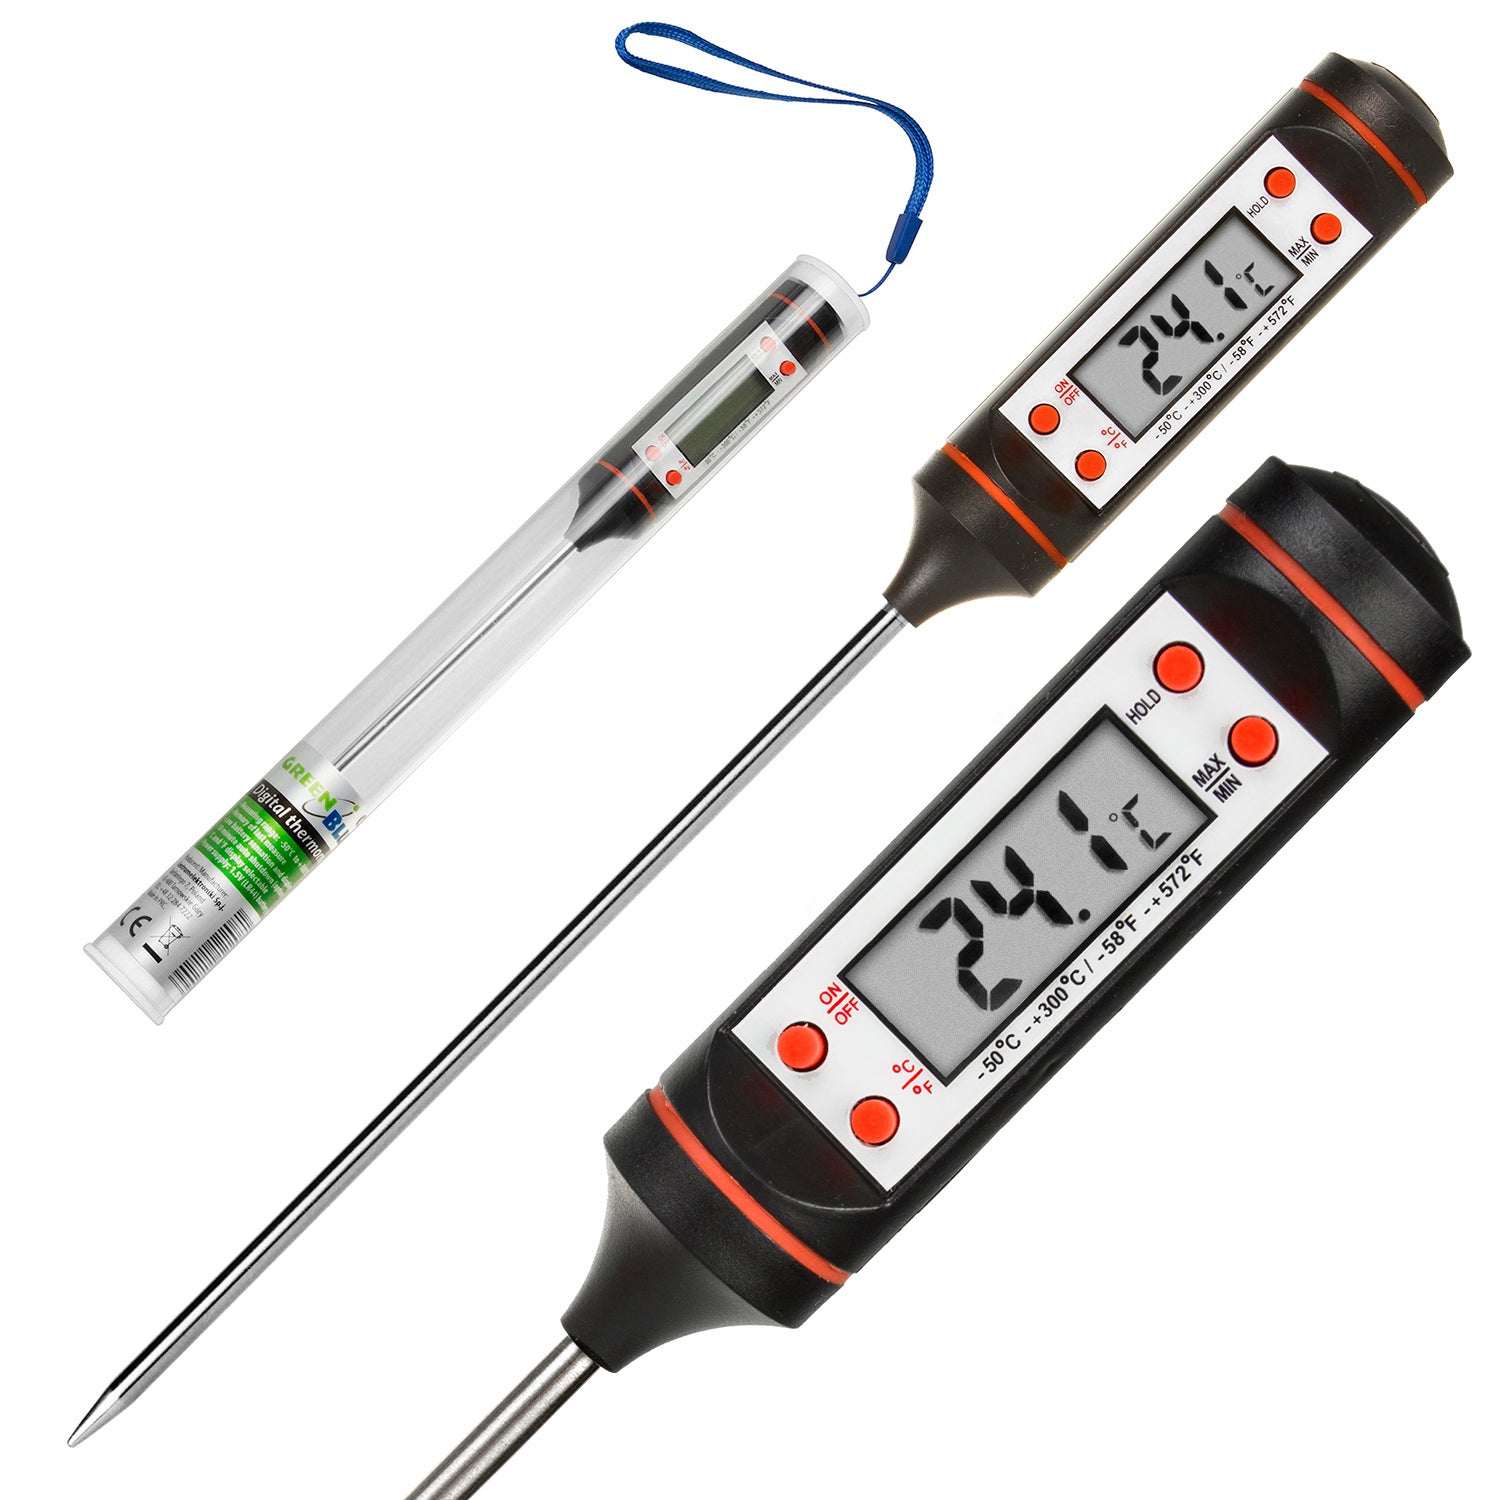 Digitales Stiftthermometer Thermometer Fühler für Lebensmittel Lebensm –  Euroelectronics DE